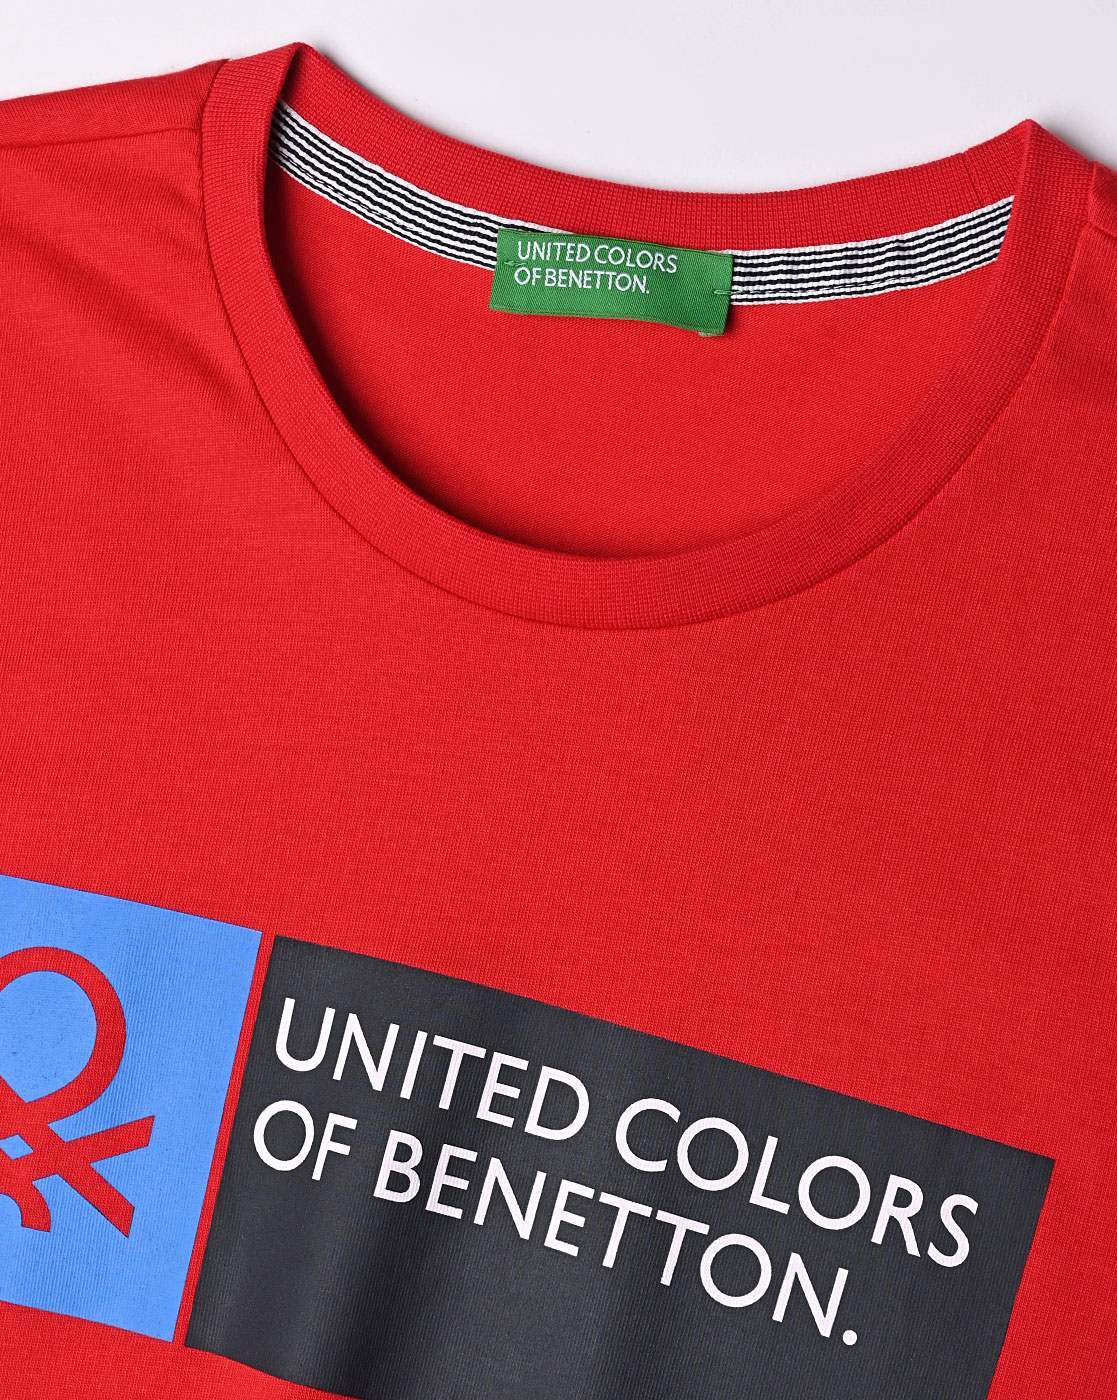 United Colors of Benetton Huddersfield - New Street